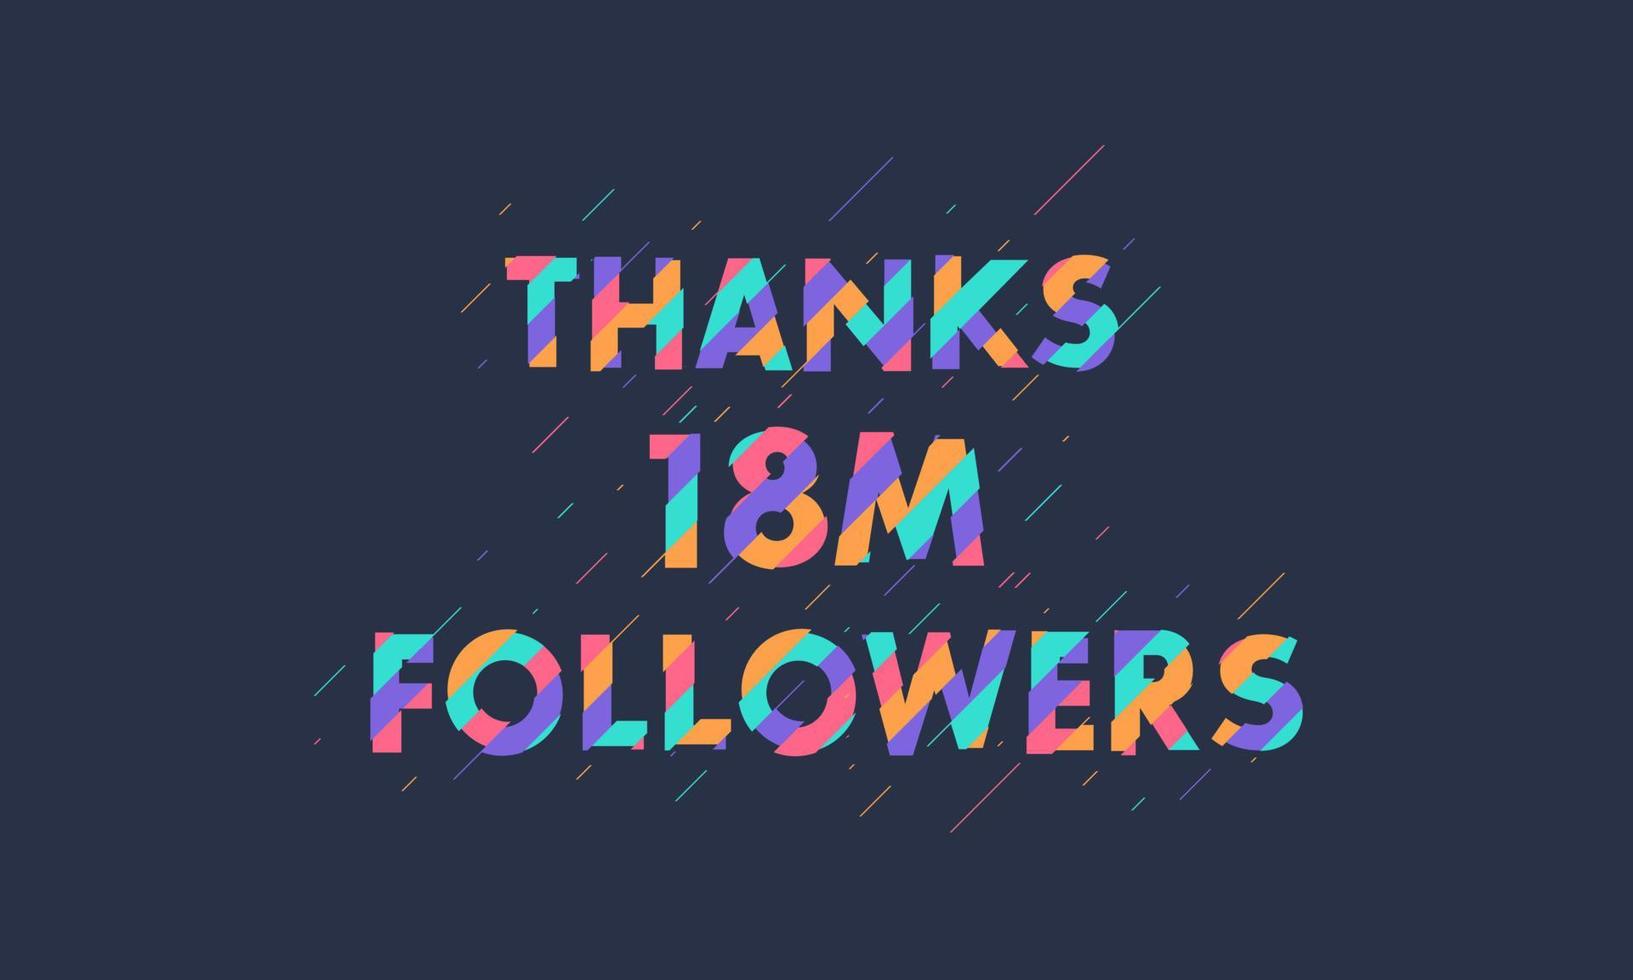 Danke 18 Millionen Follower, 18000000 Follower feiern modernes, farbenfrohes Design. vektor